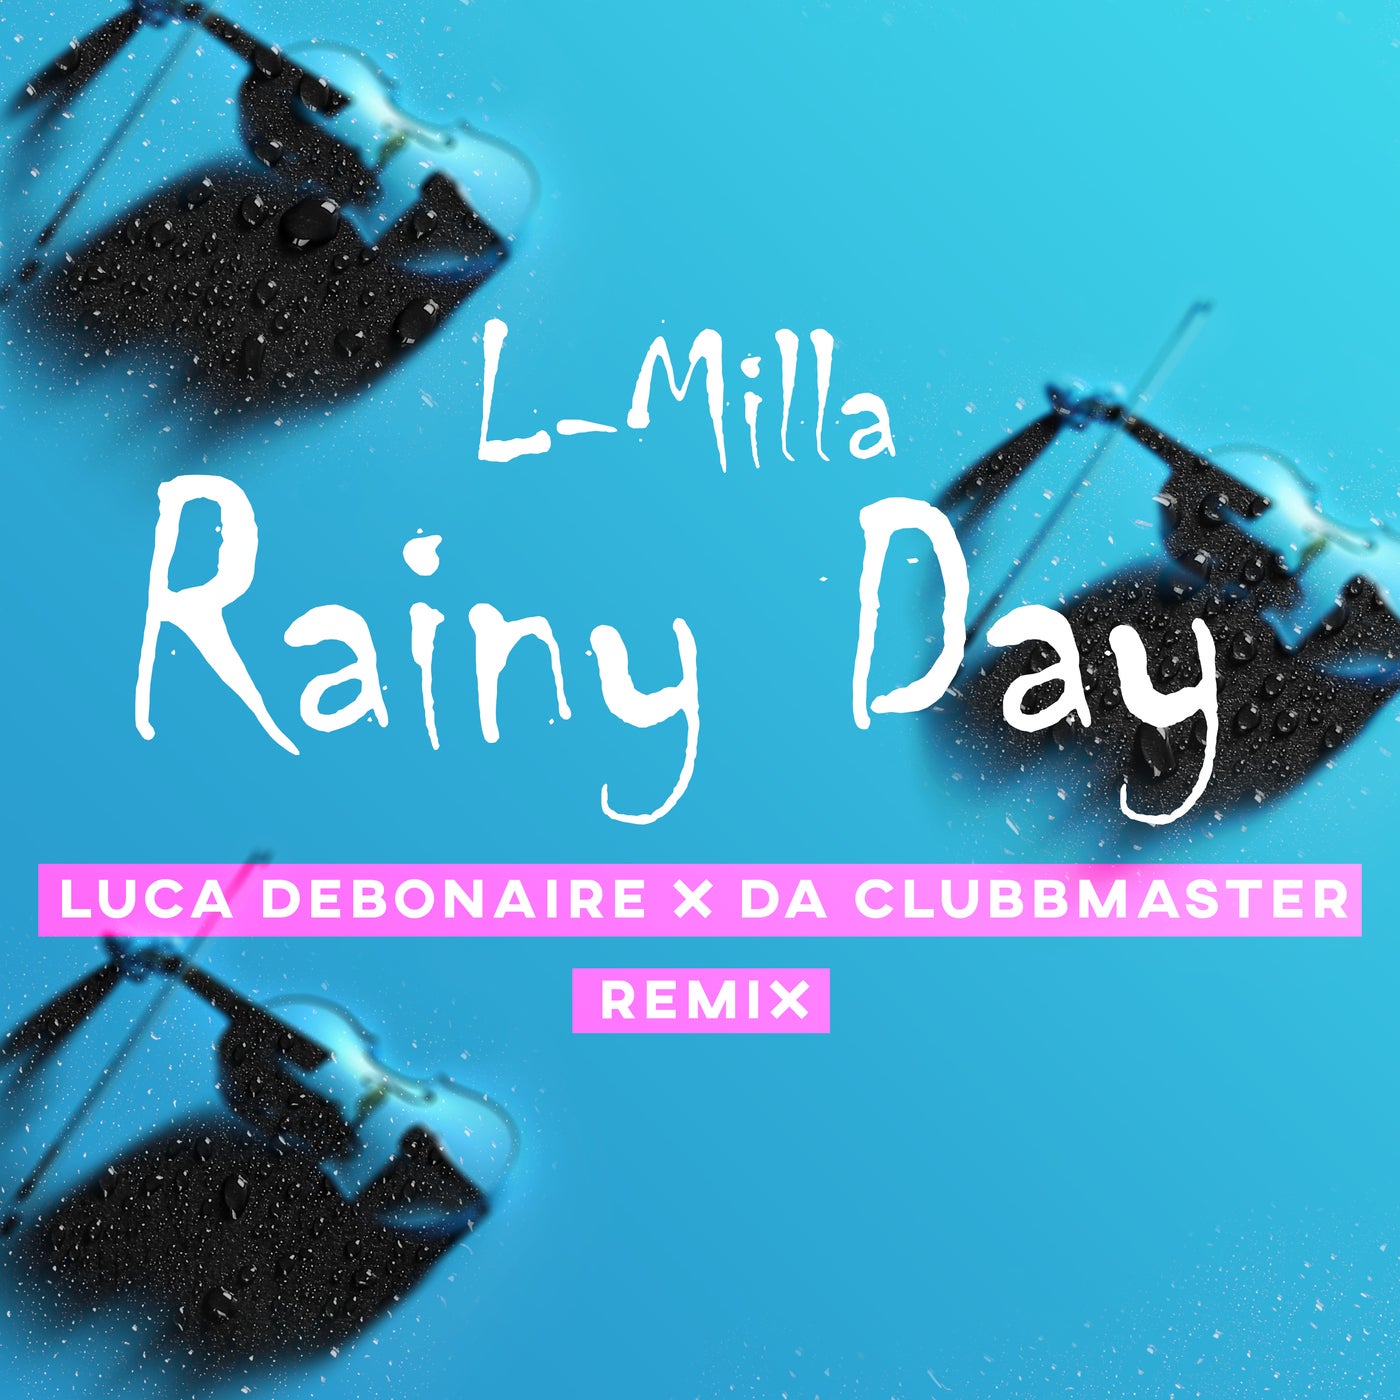 Da Clubbmaster, Luca Debonaire – Rainy Day (Luca Debonaire x Da Clubbmaster Remix) [DIG160743]